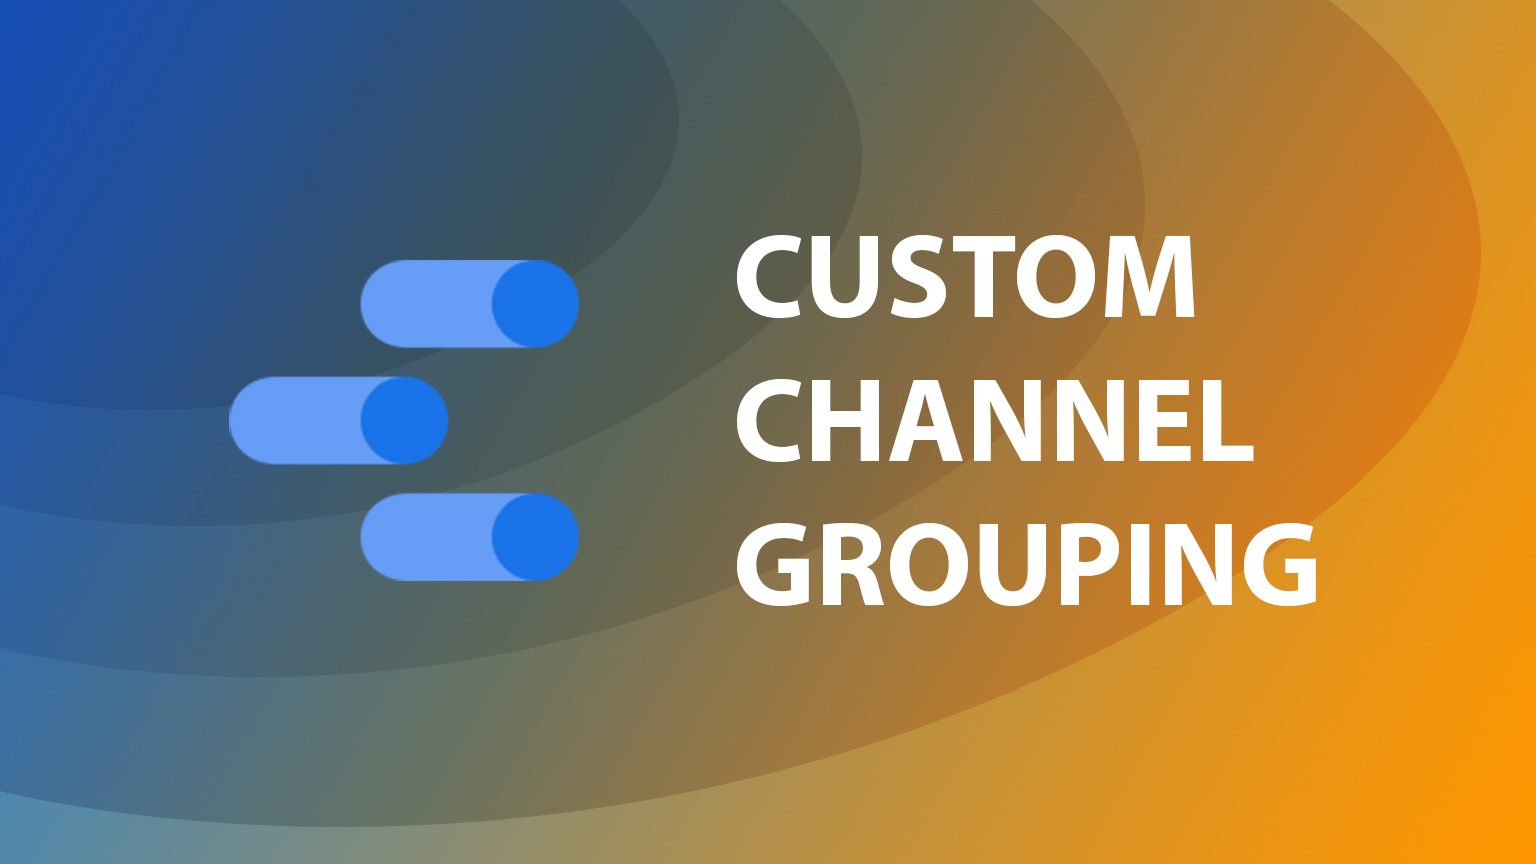 Data studio custom channel grouping title image